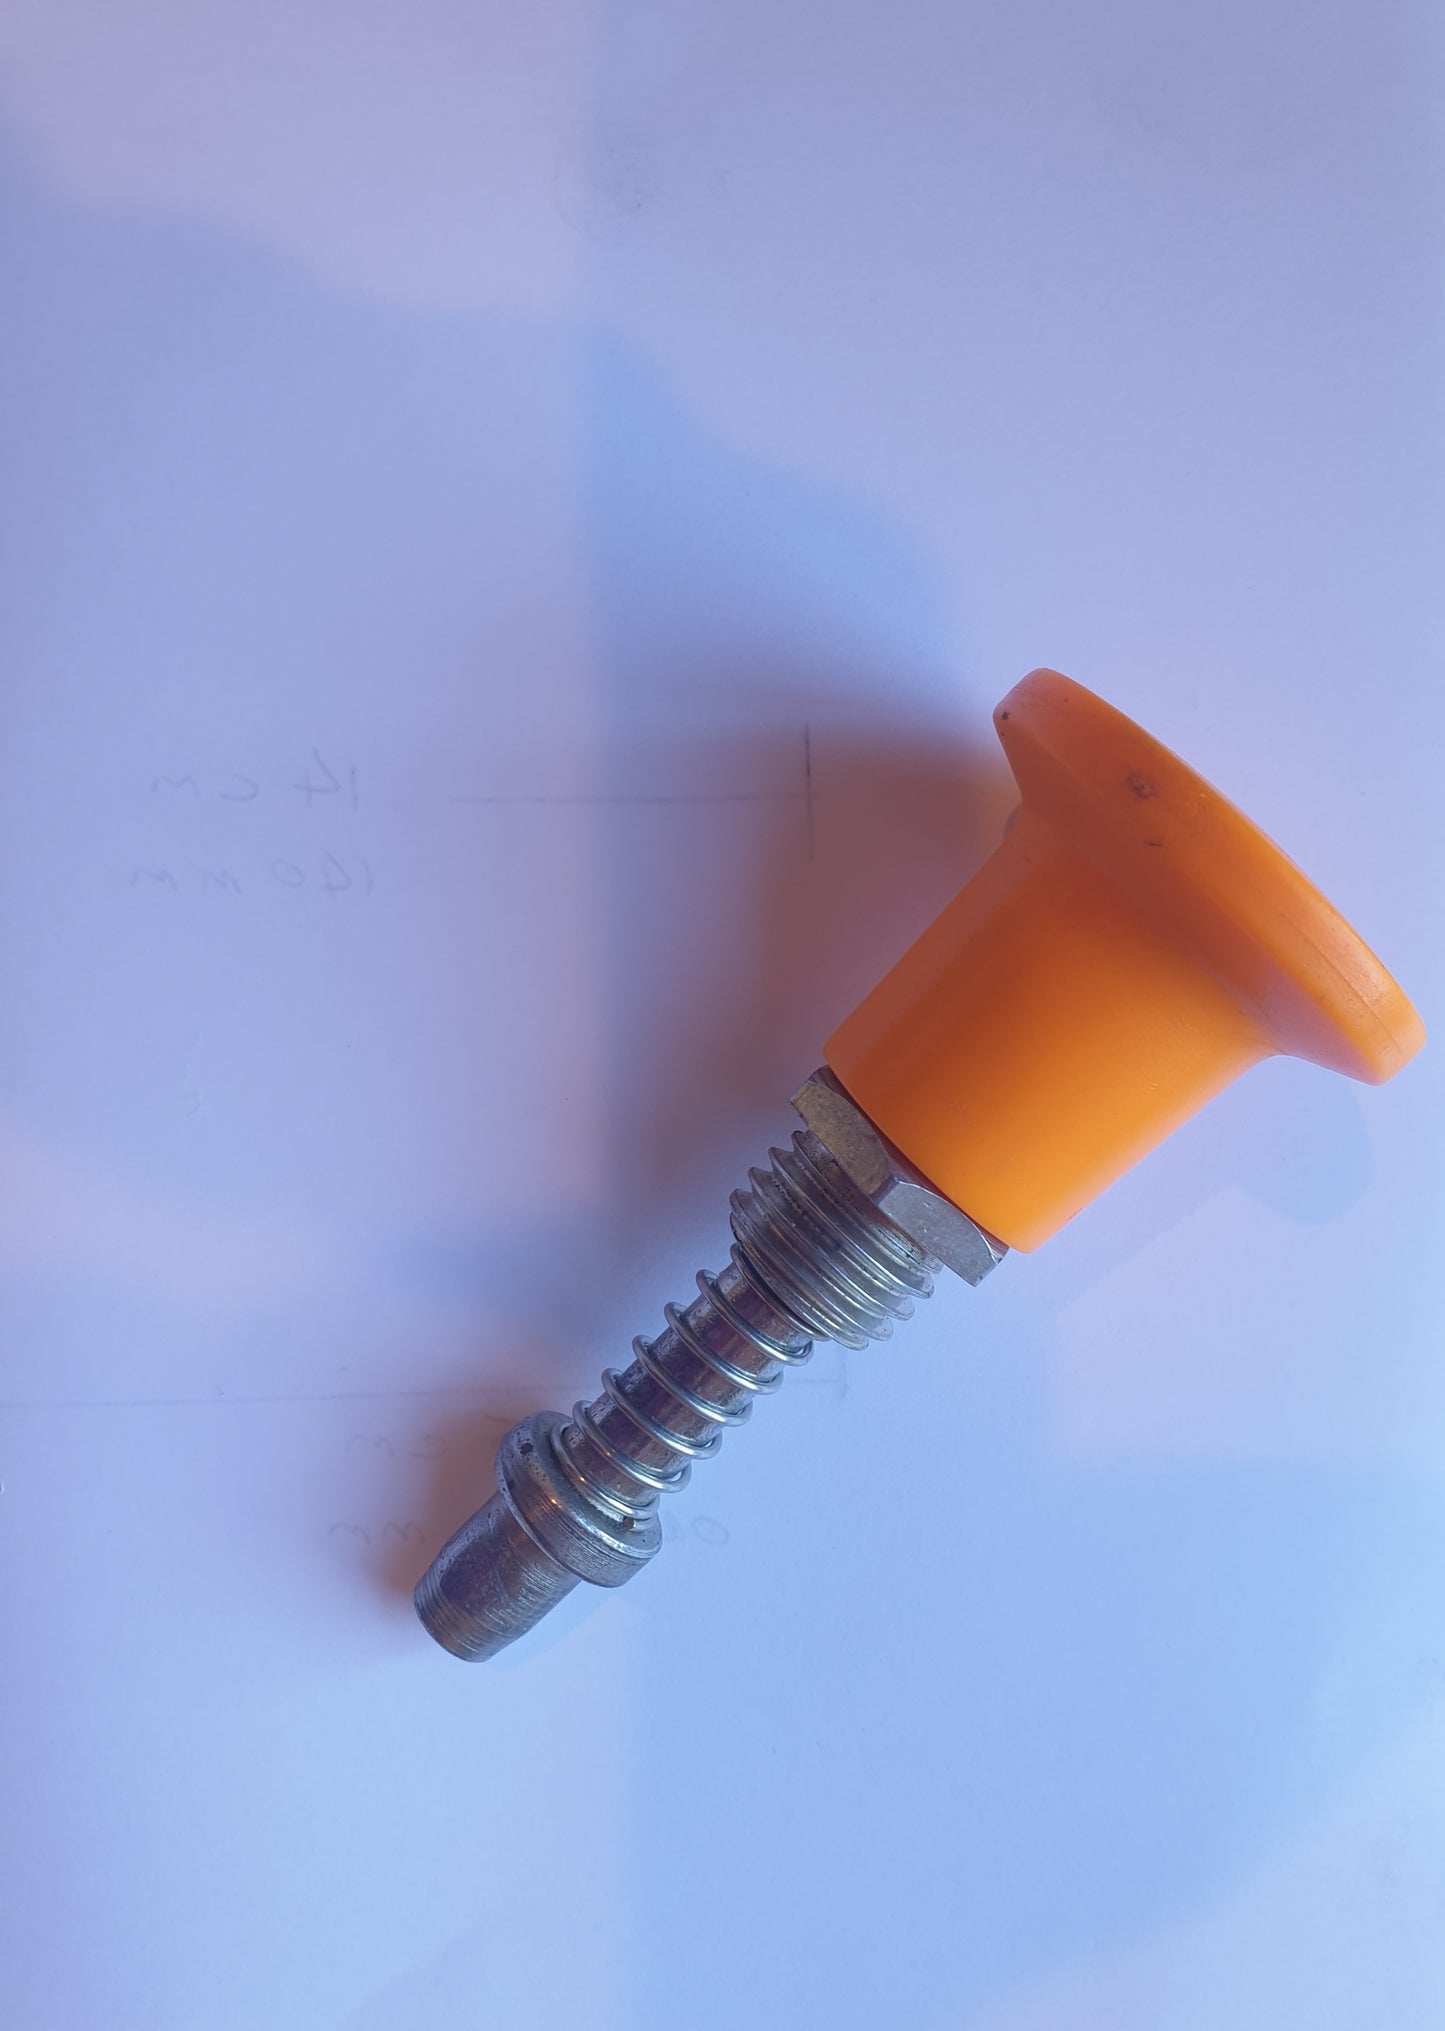 GF7*02-5333801 Orange Pull Pin 60mm